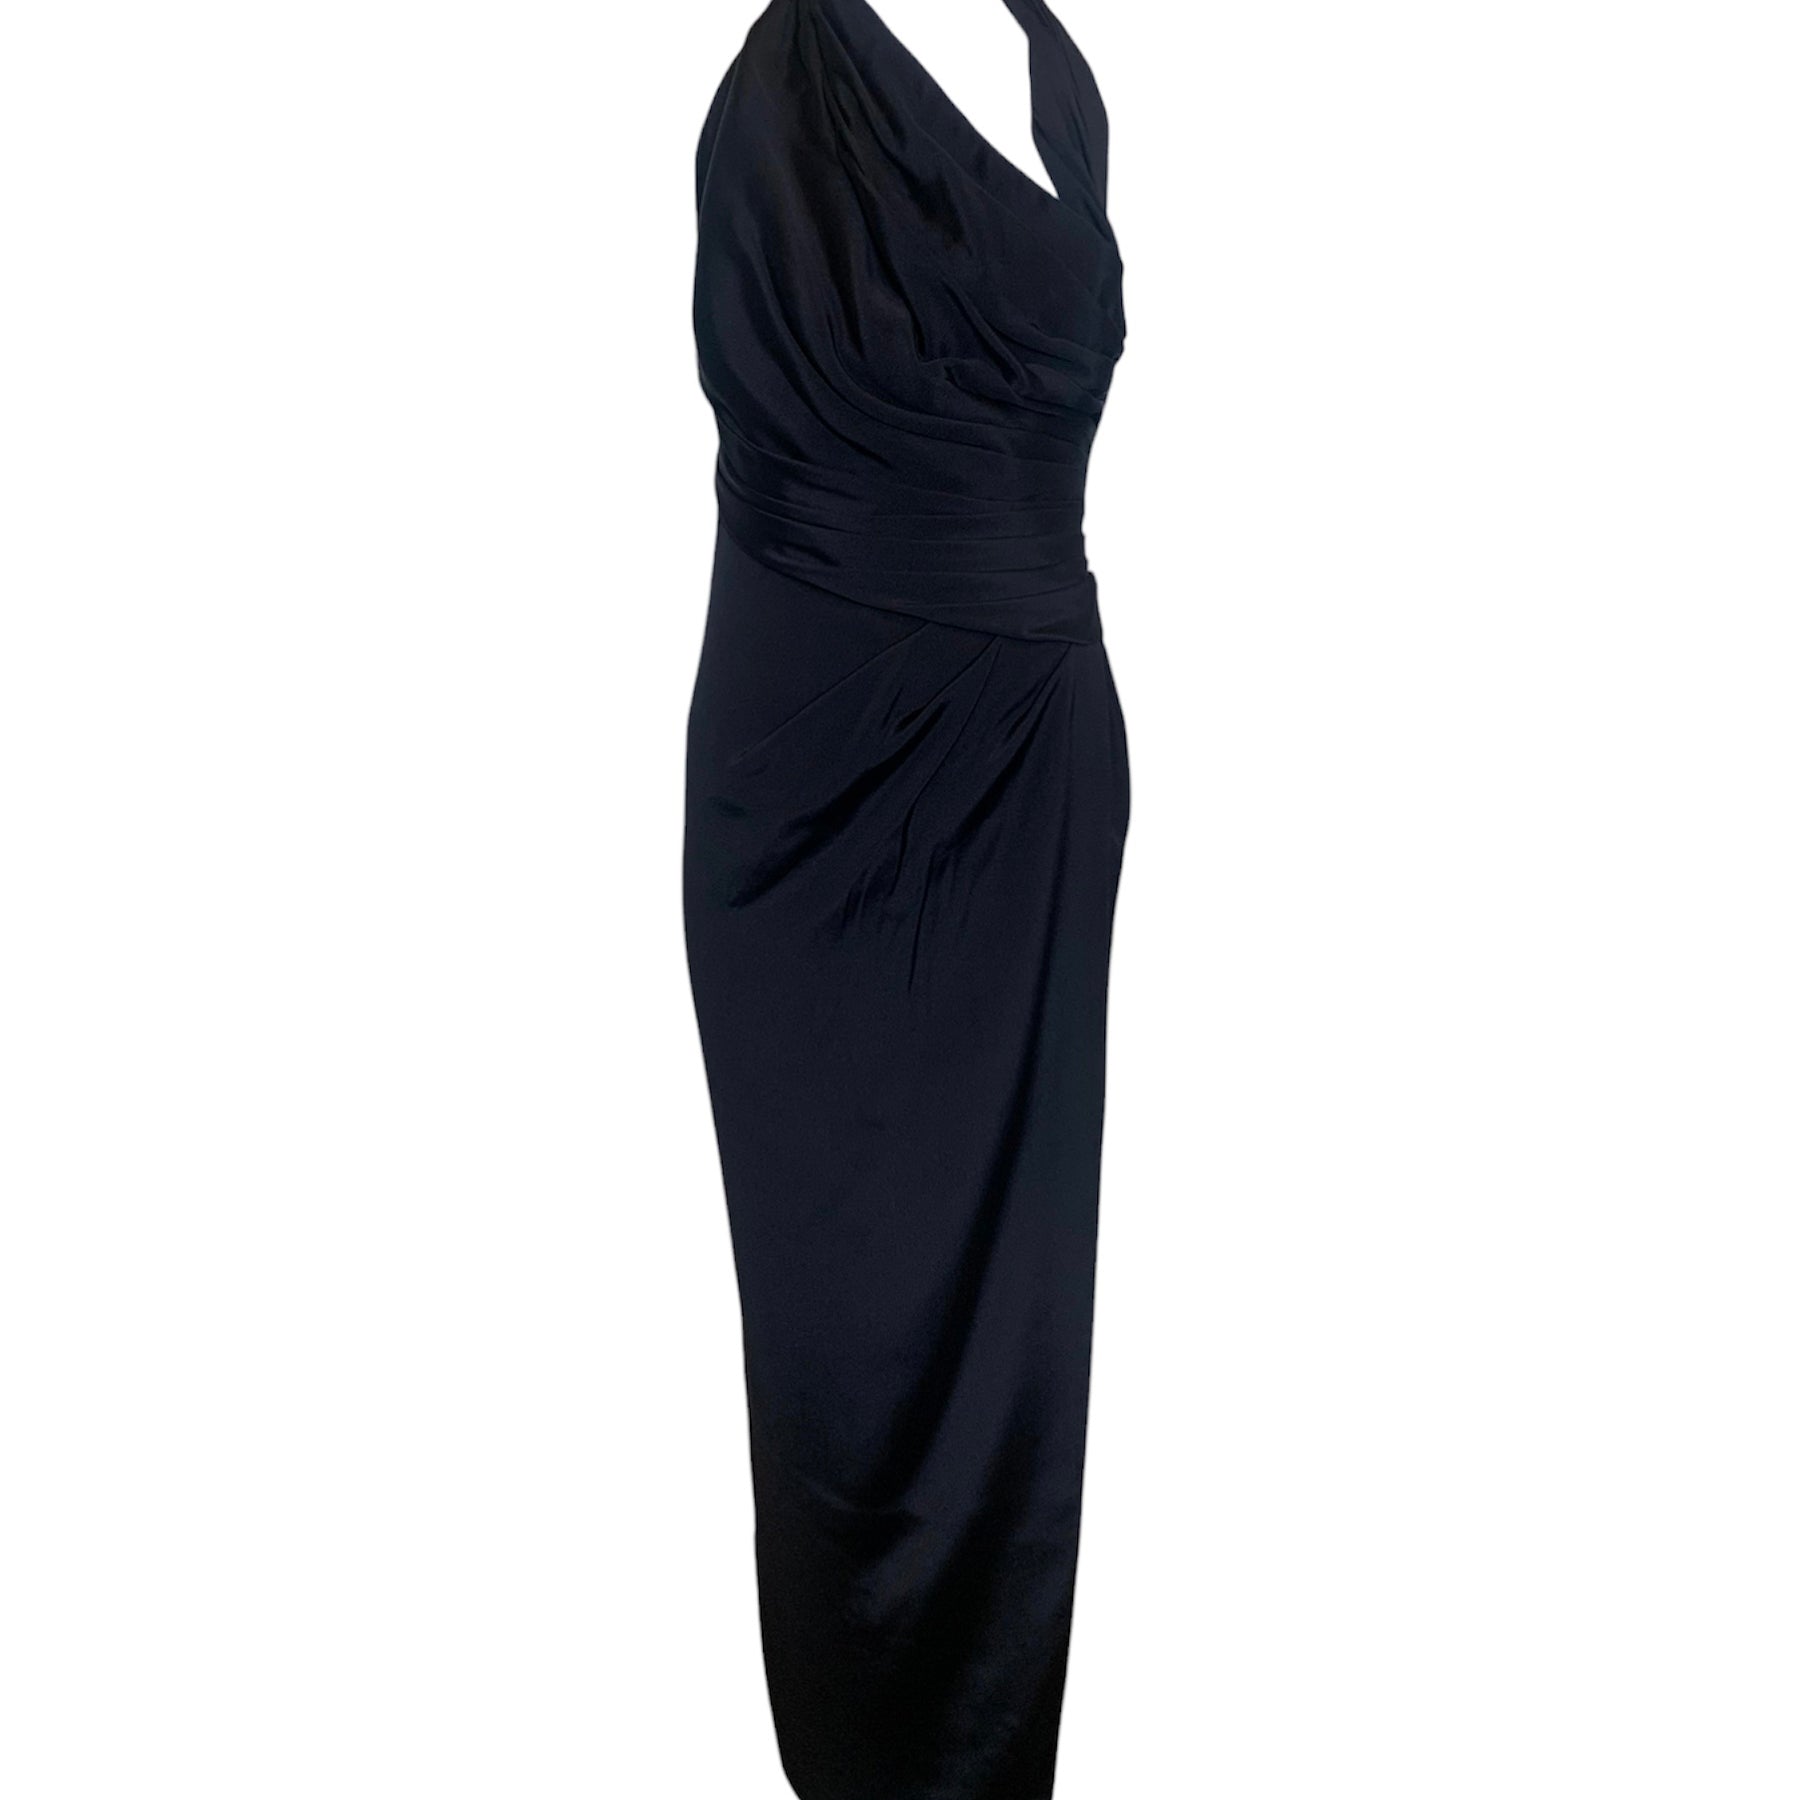 Atelier Versace 90s Lifetime Gianni Versace Black Silk Goddess Halter Gown FRONT 1 of 4